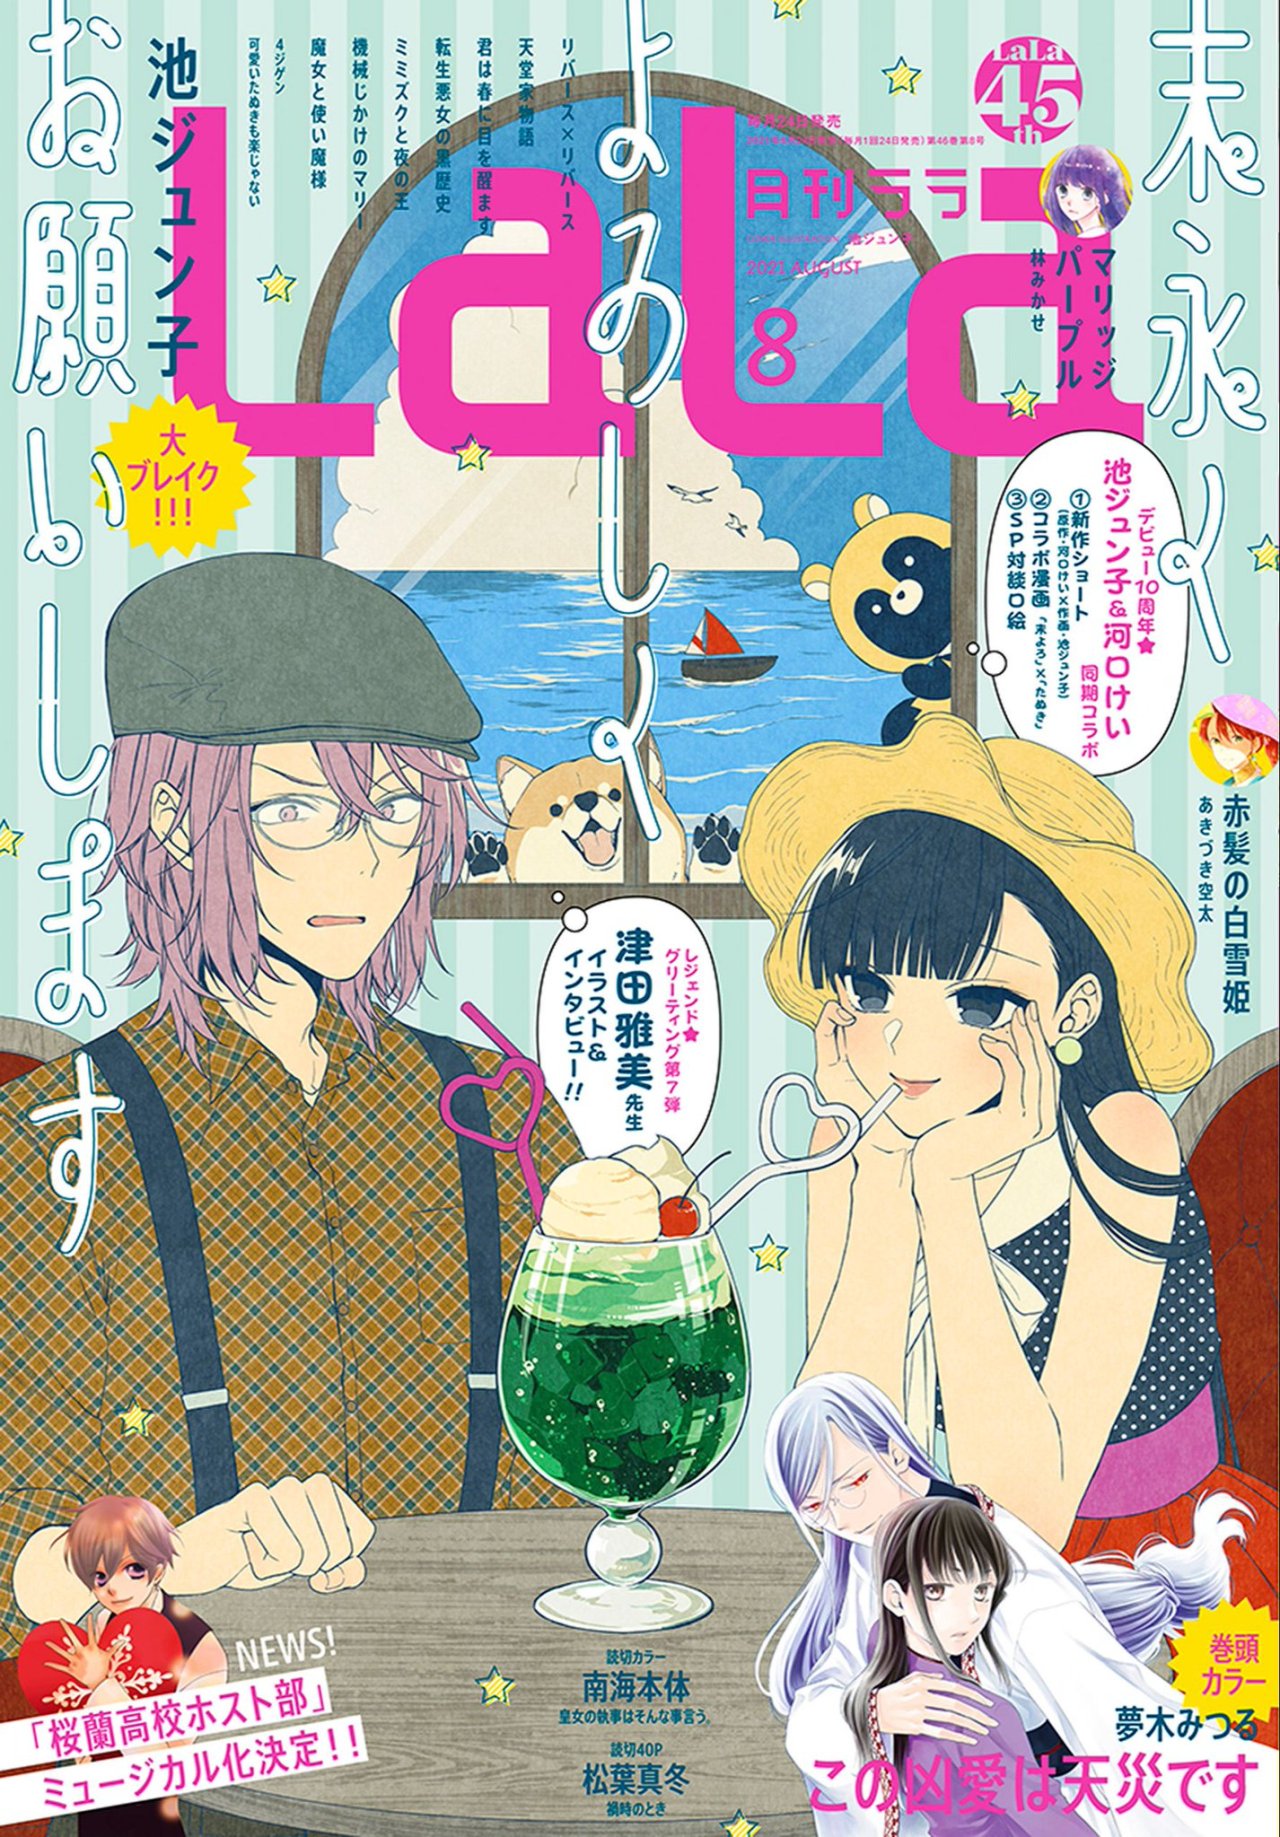 Manga Addict Lala August 21 Issue